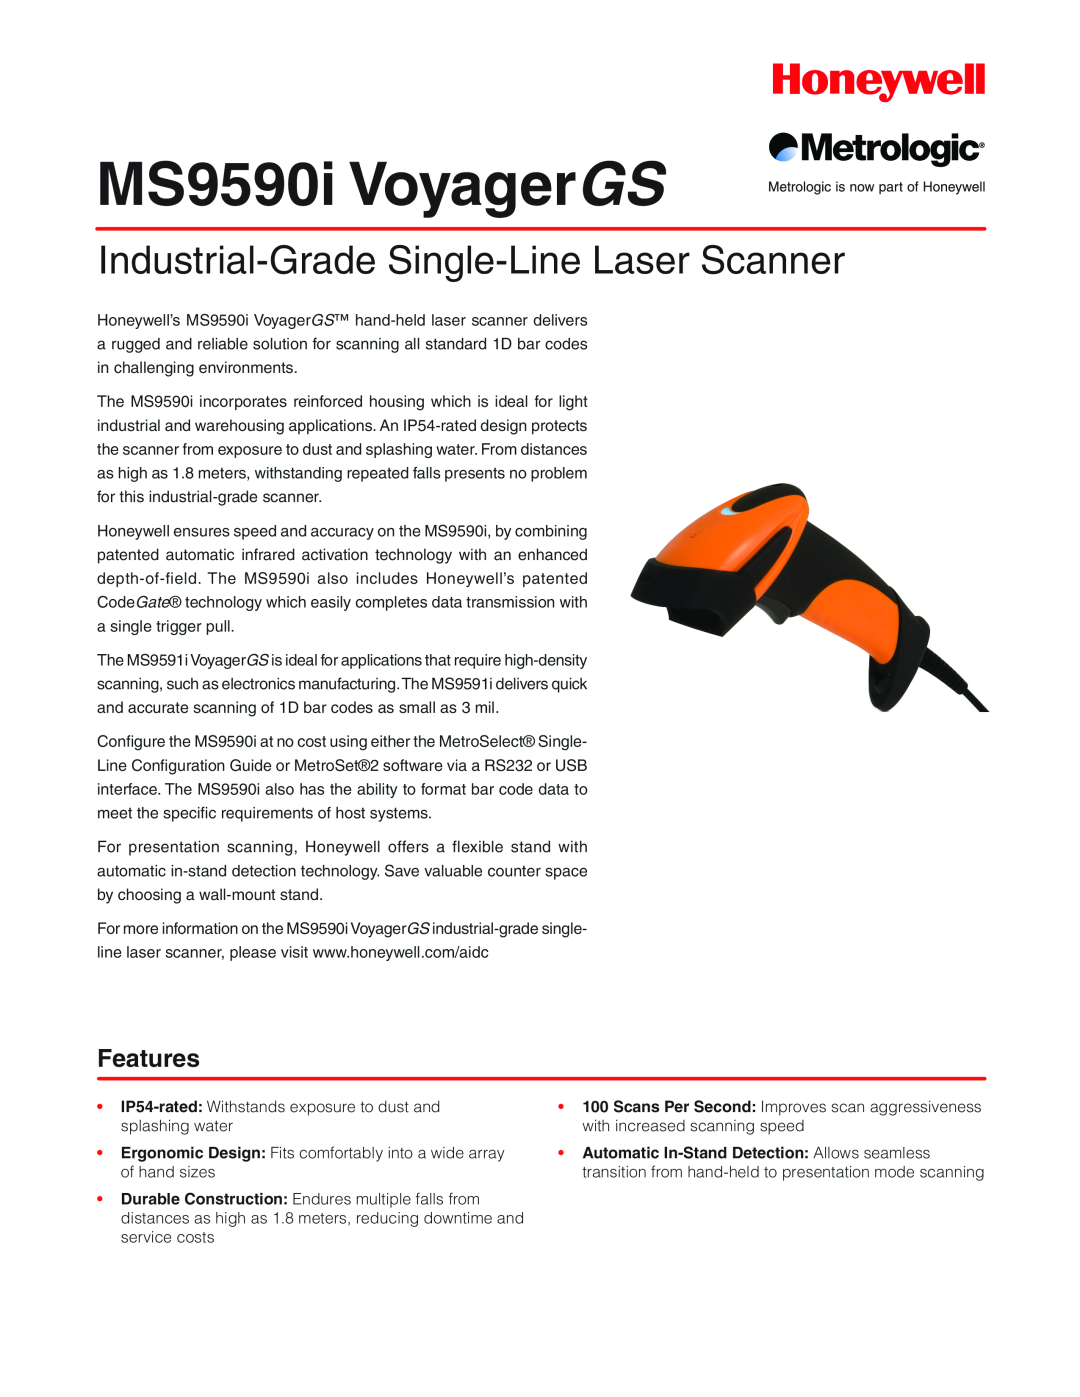 Metrologic Instruments manual MS9590i VoyagerGS, Industrial-Grade Single-Line Laser Scanner, Features 